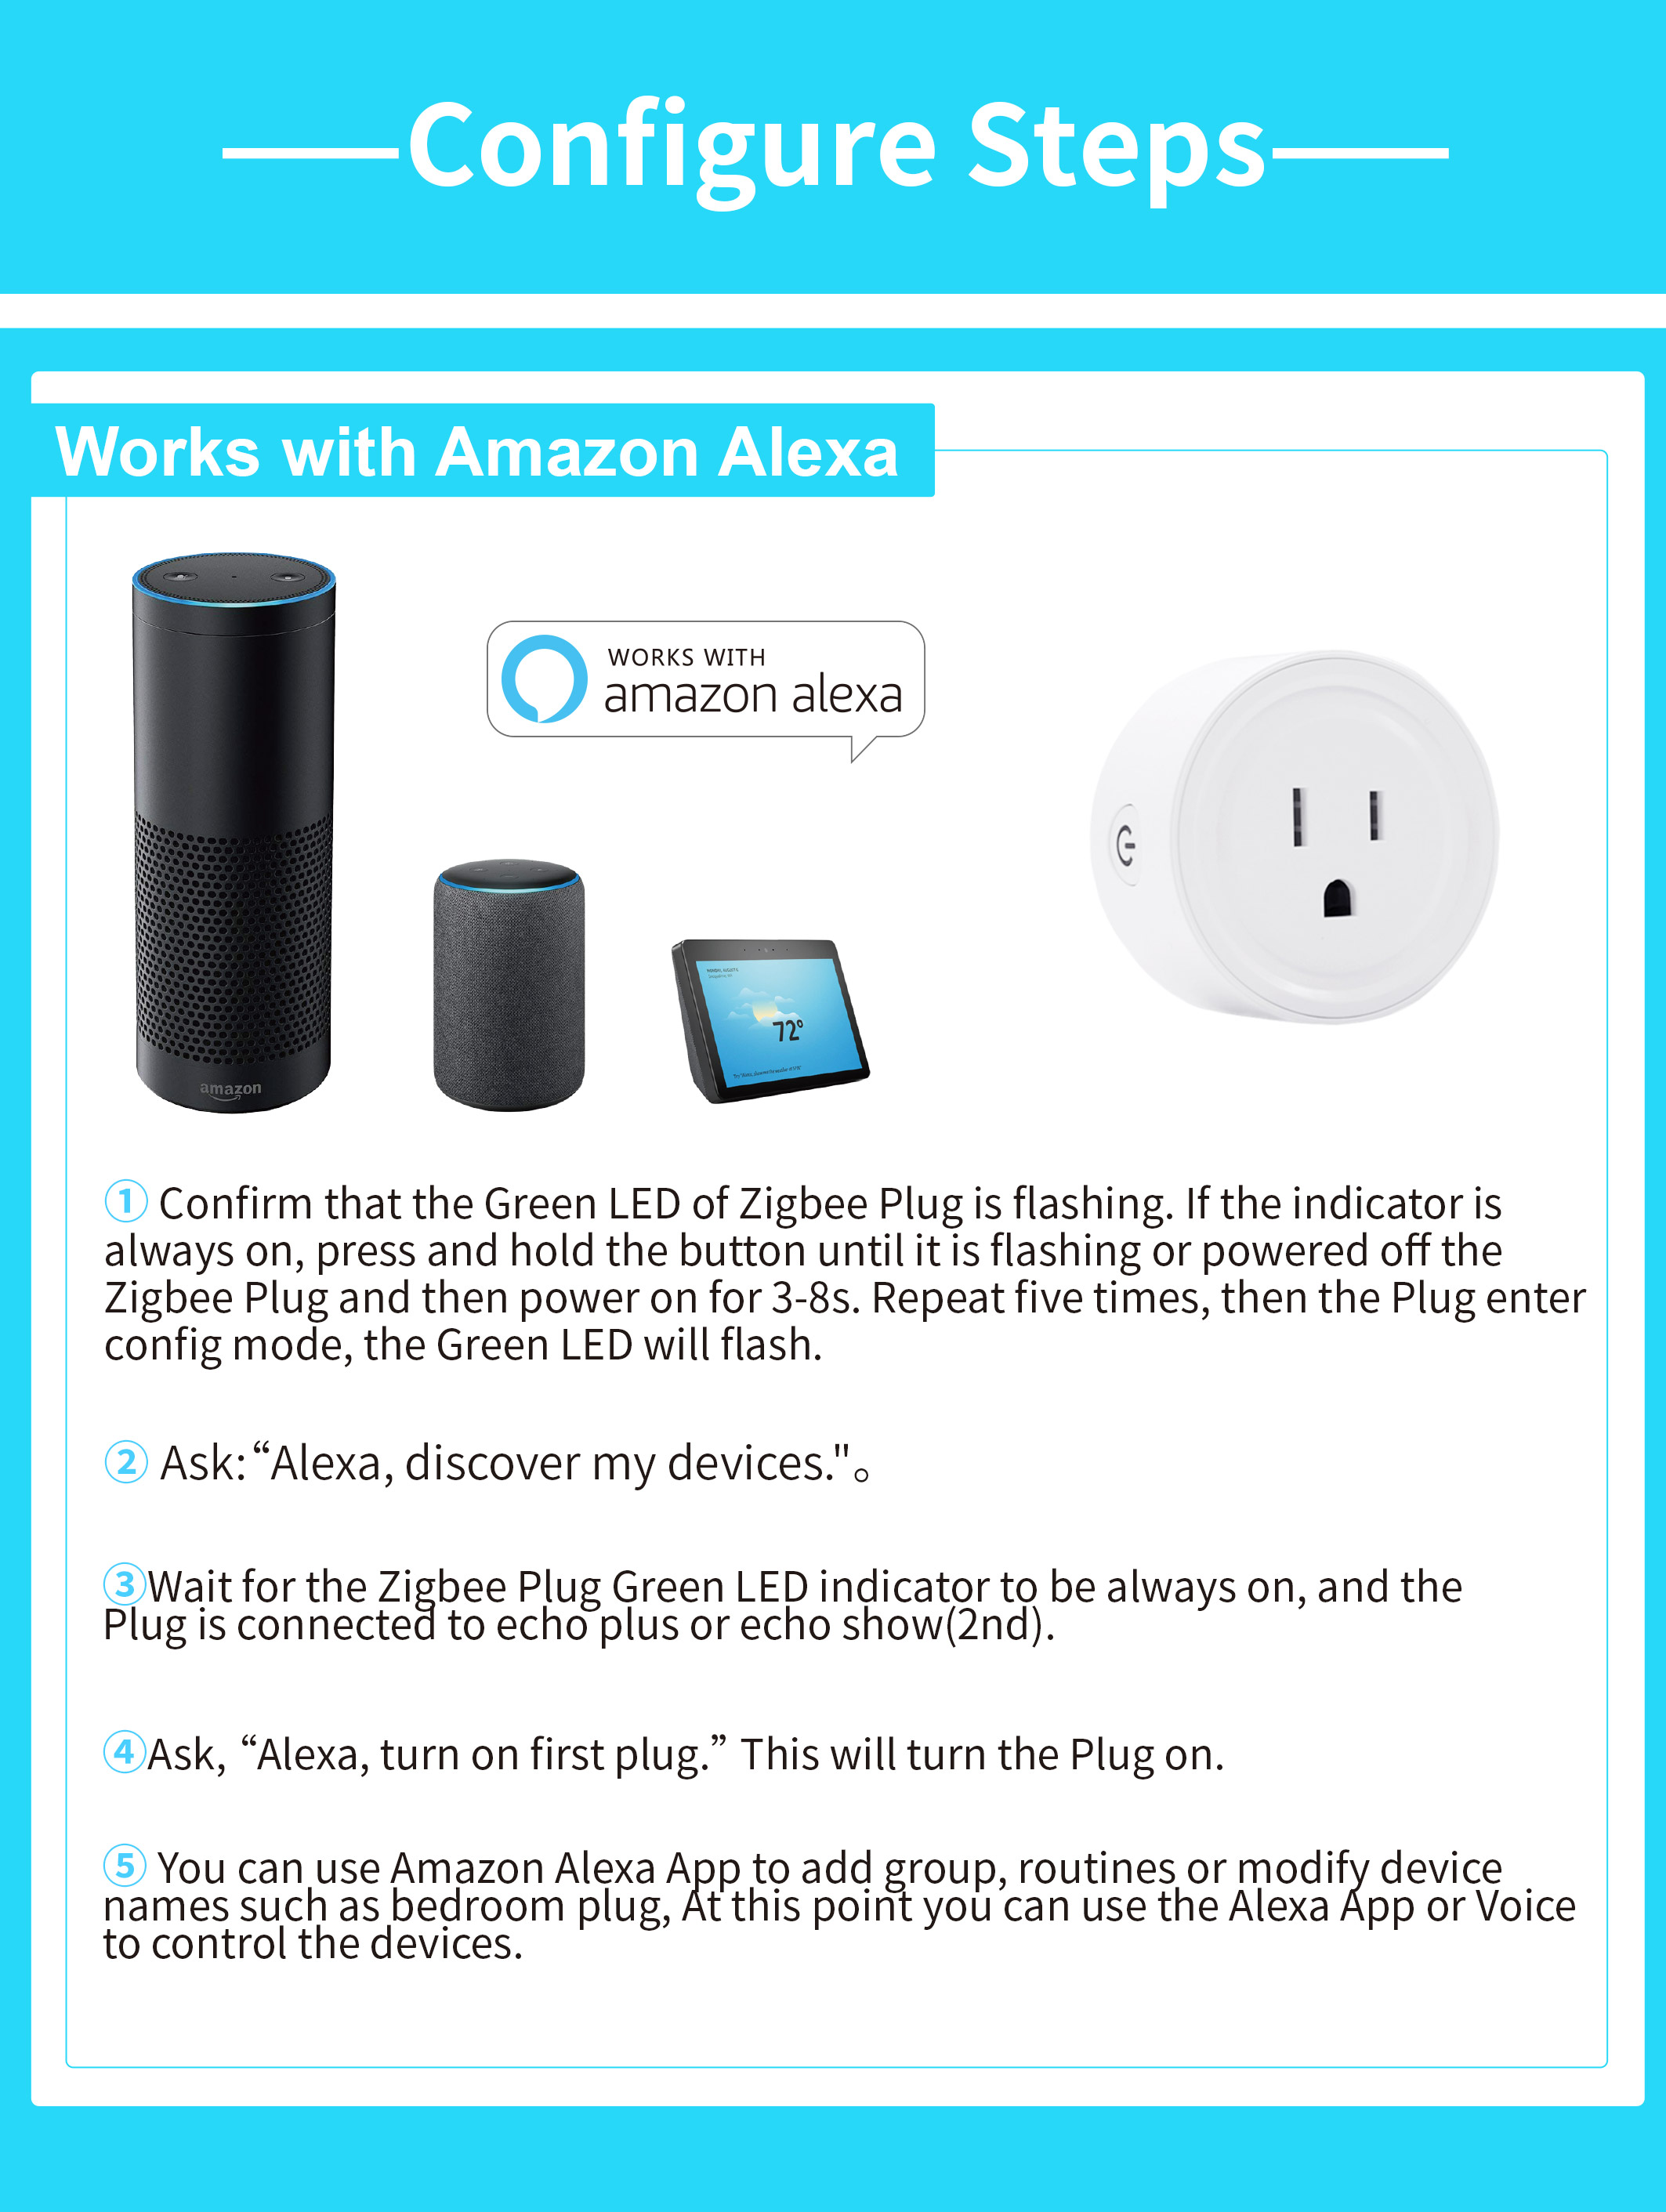 Mini-Smart-WiFi-Switch-Power-Socket-Outlet-US-Plug-Support-3-Type-Echo-Device-AlexaSmart-Things-App-1447885-8